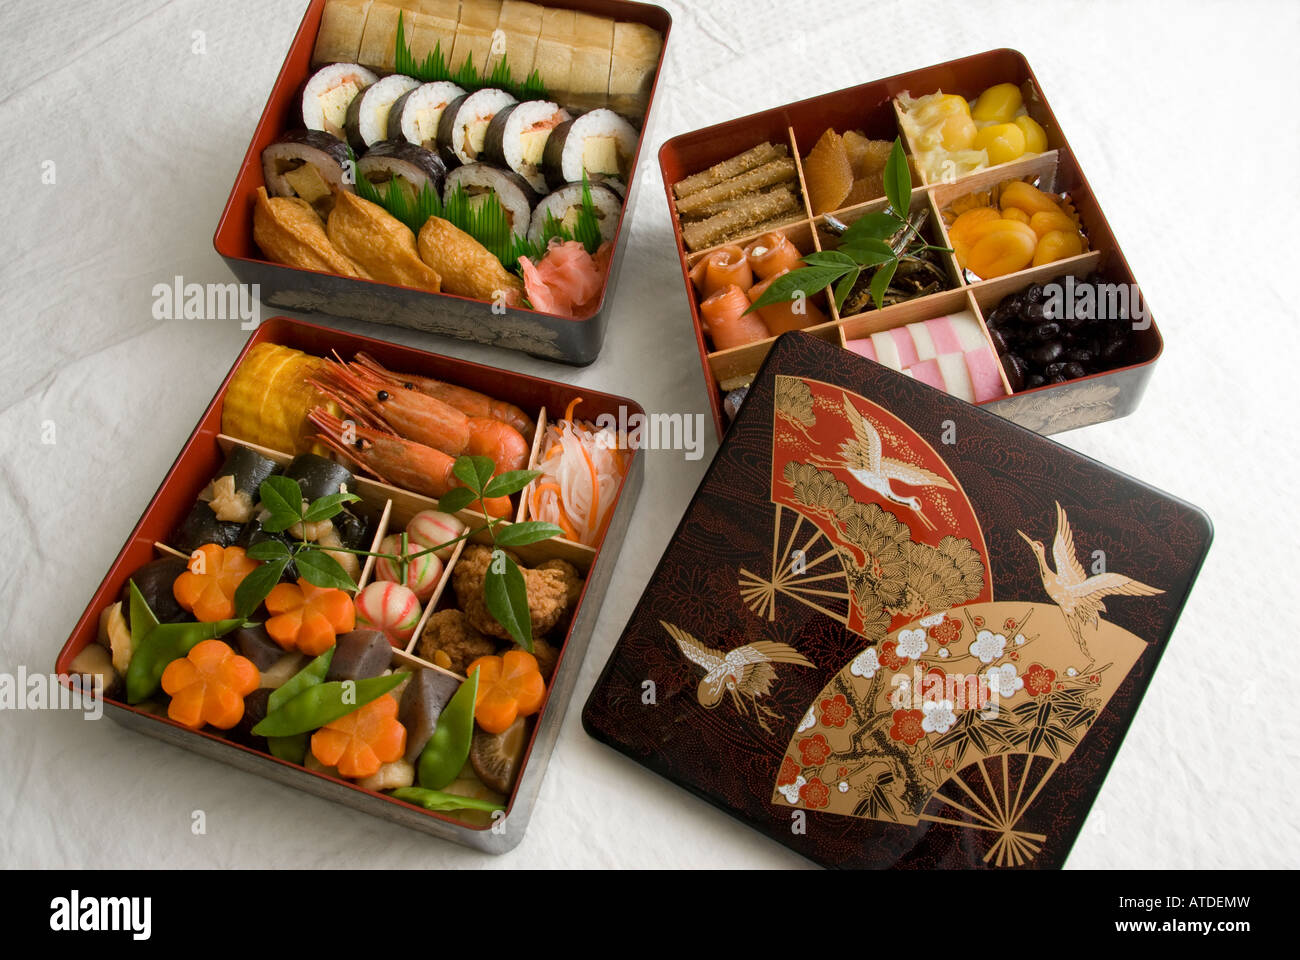 https://c8.alamy.com/comp/ATDEMW/three-tiered-lacquered-box-called-jubako-containing-traditional-japanese-ATDEMW.jpg